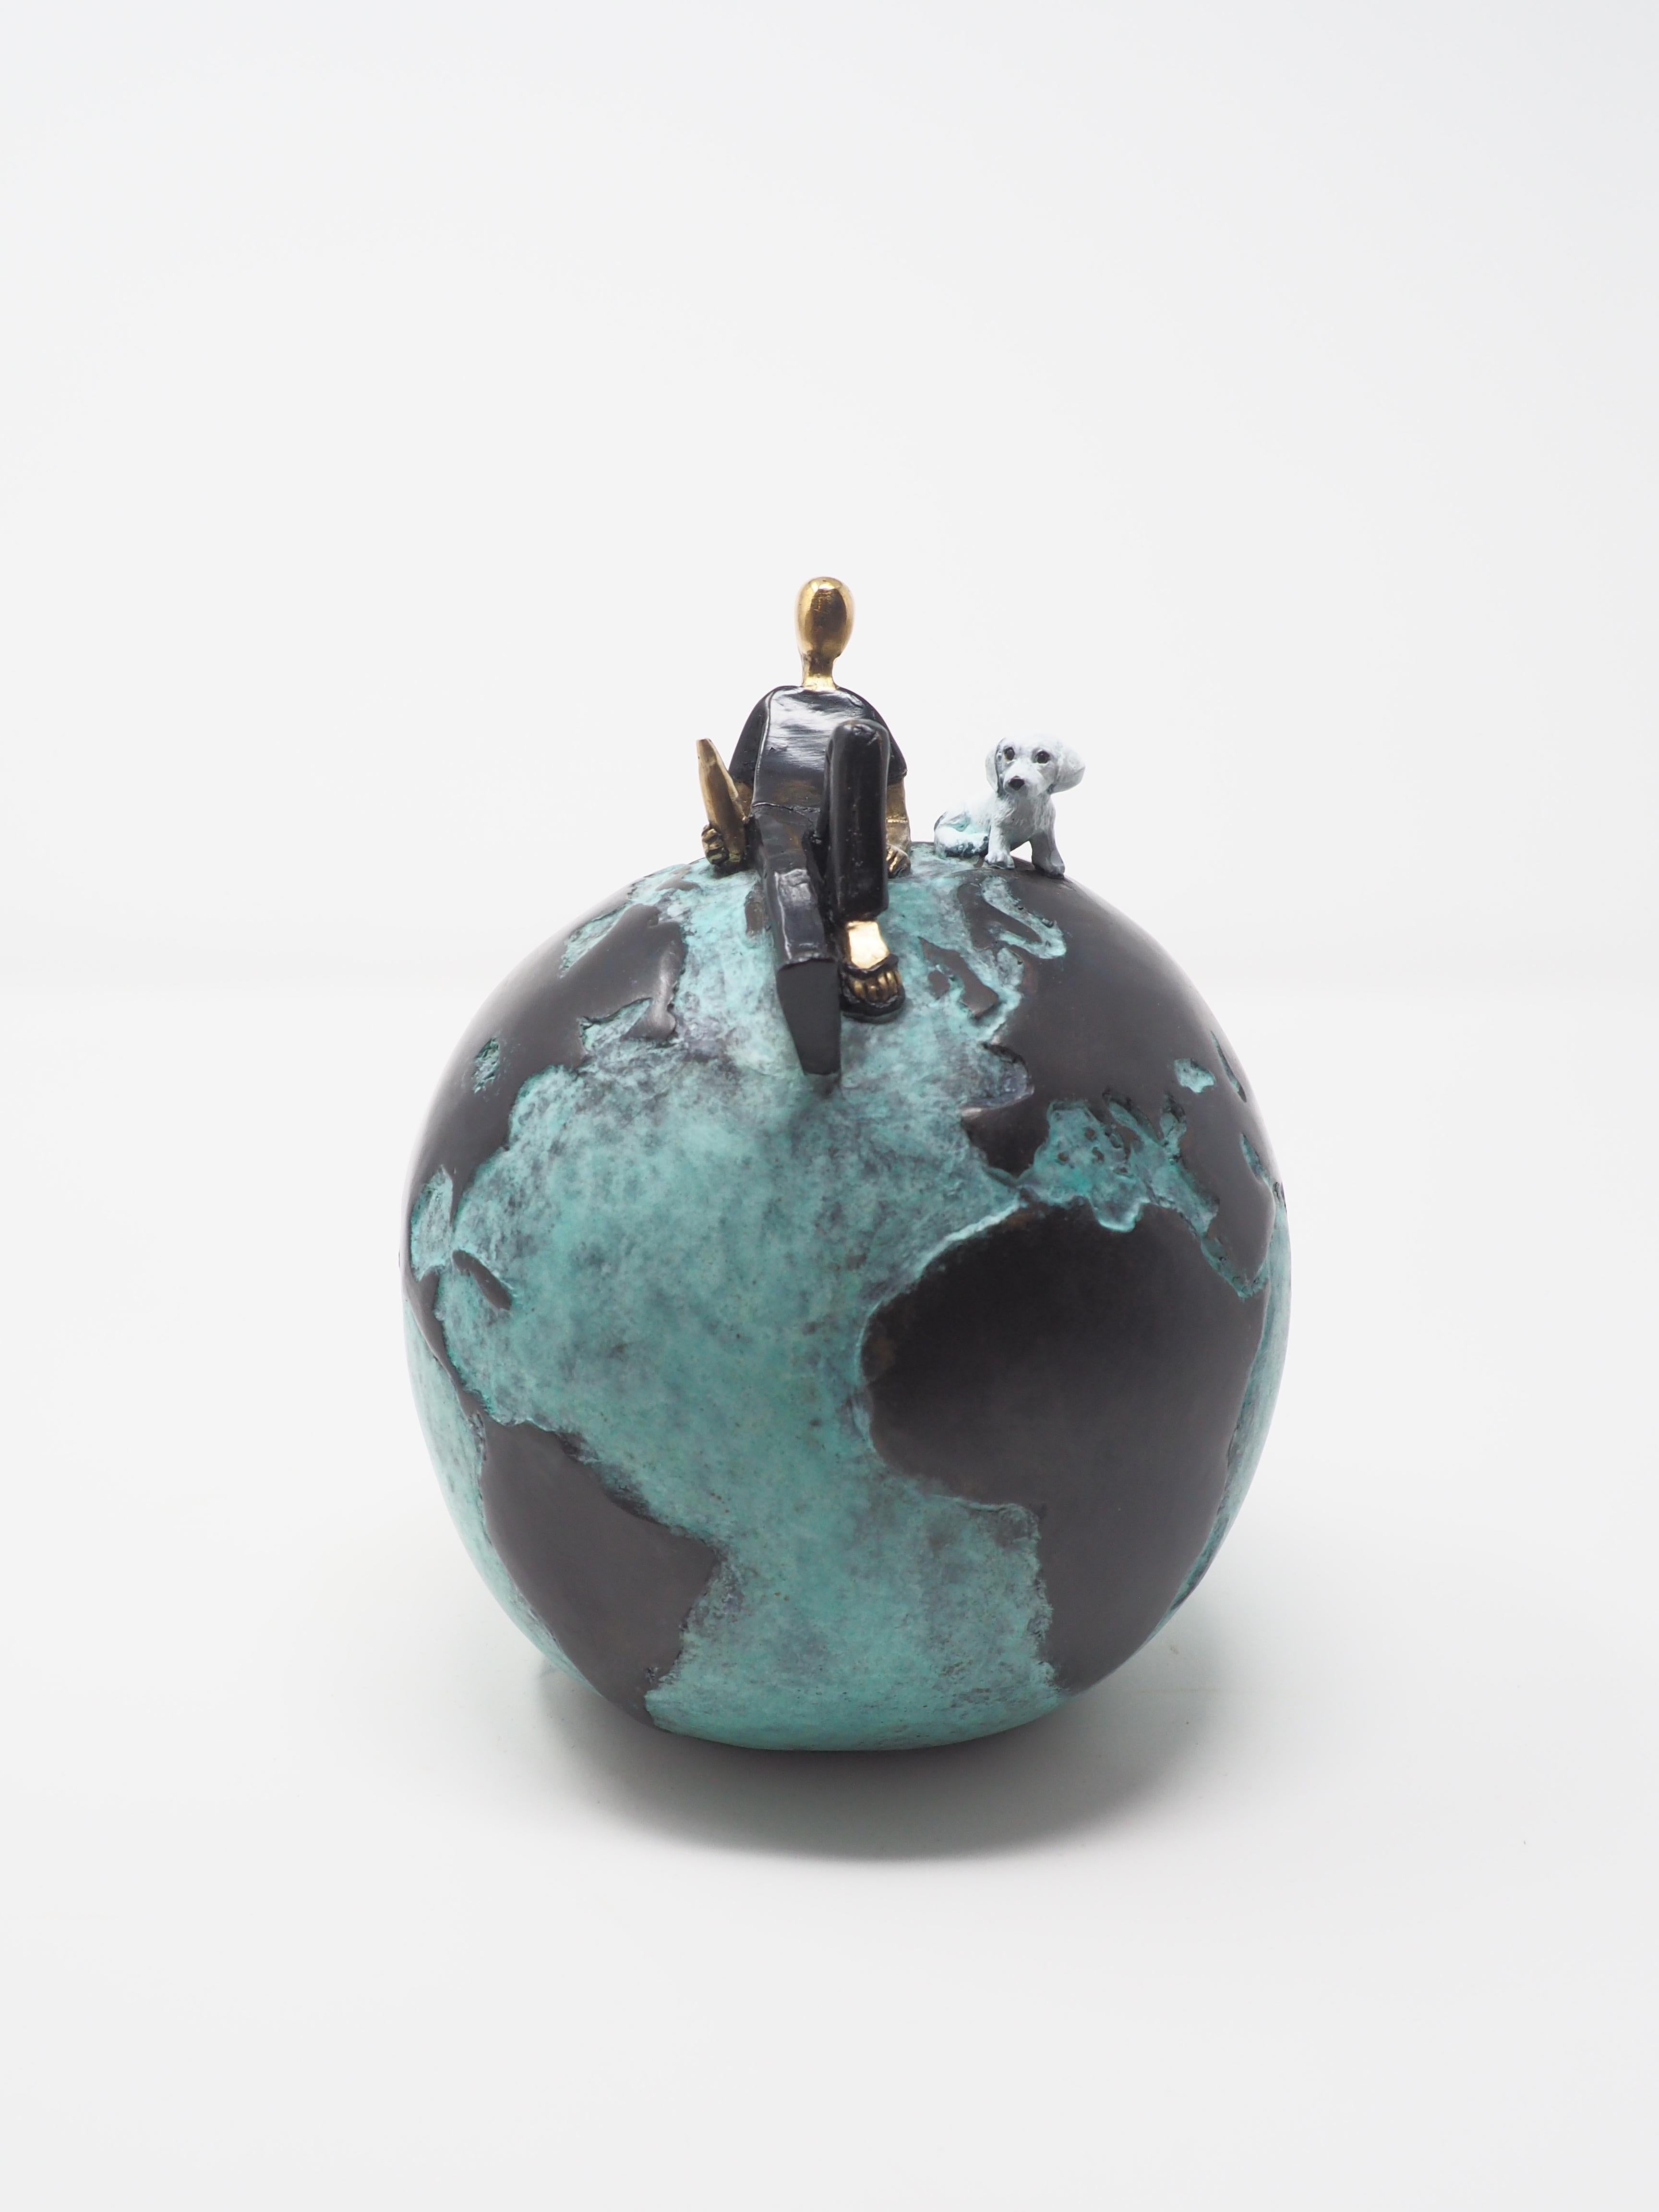 Mireia Serra Figurative Sculpture - Laid back- figurative bronze sculpture of a man with a dog on a globe